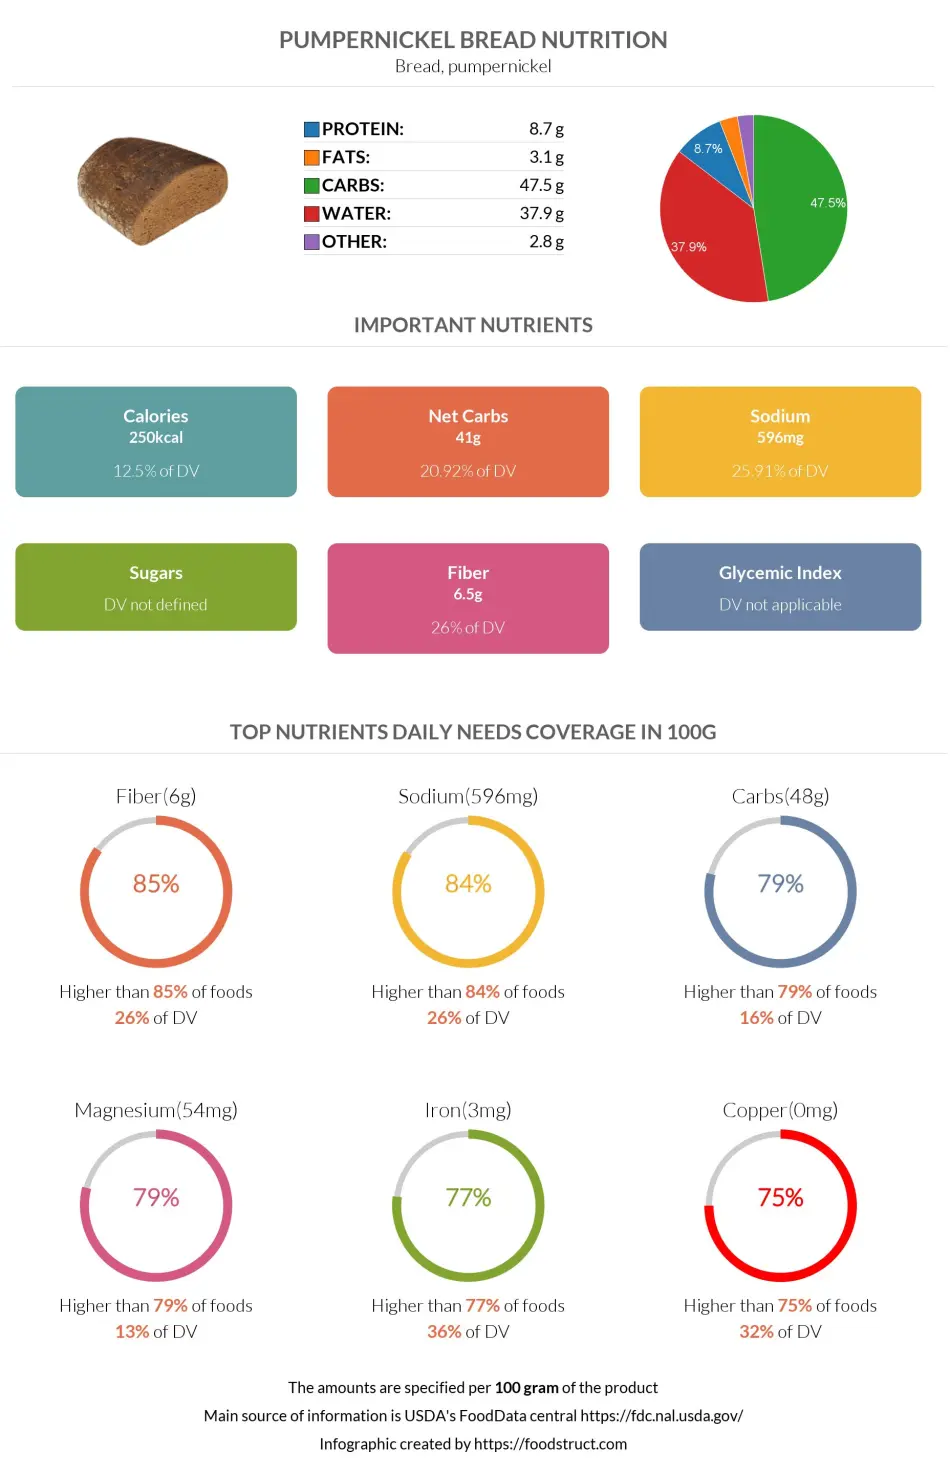 Pumpernickel bread nutrition infographic